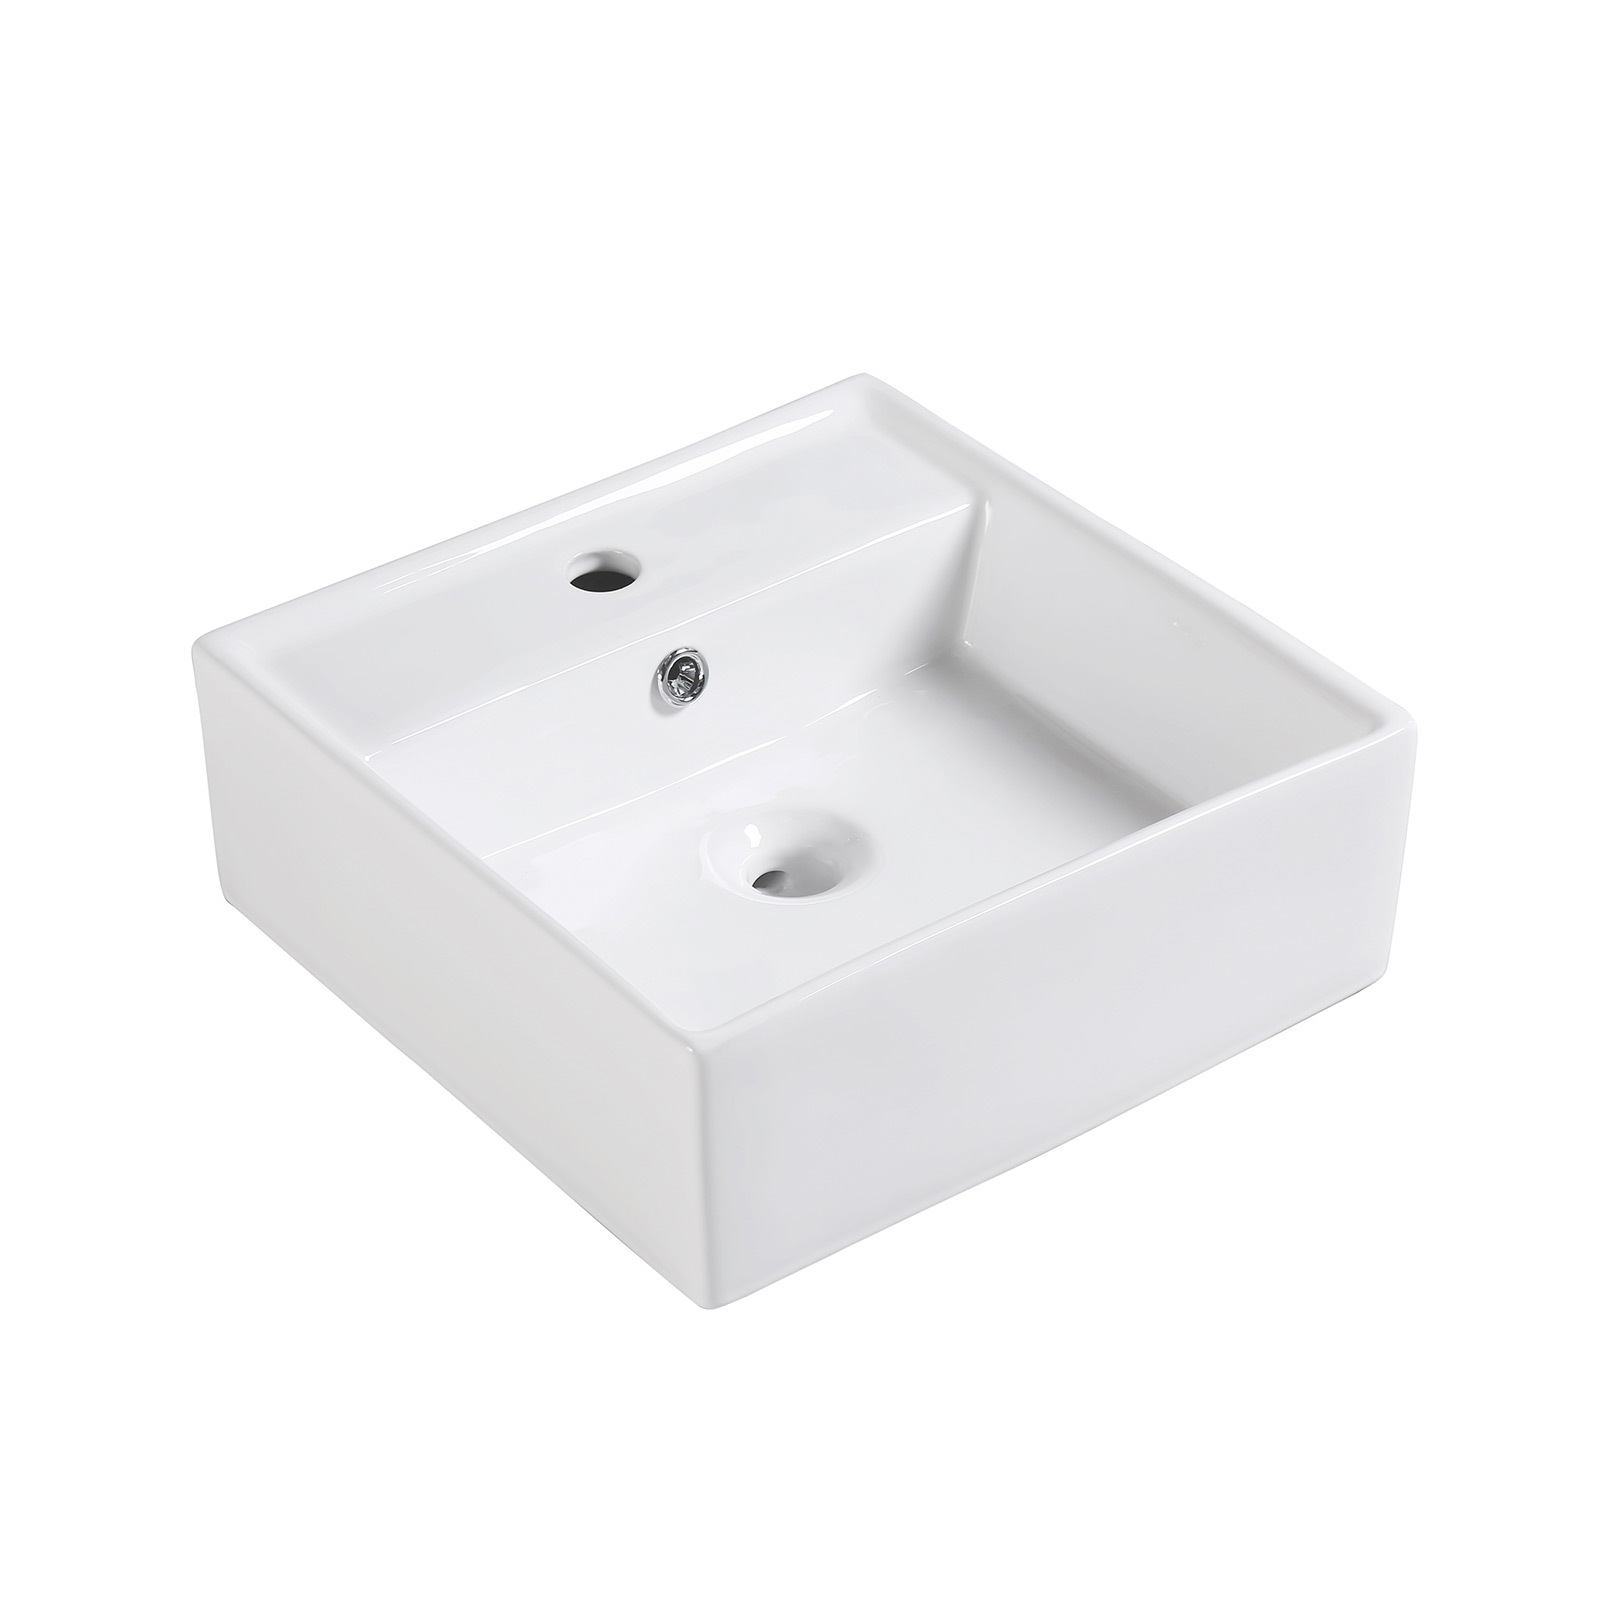 42X 42X 15cm Ceramic Bathroom Basin Square With Faucet Drain Hole - WHITE